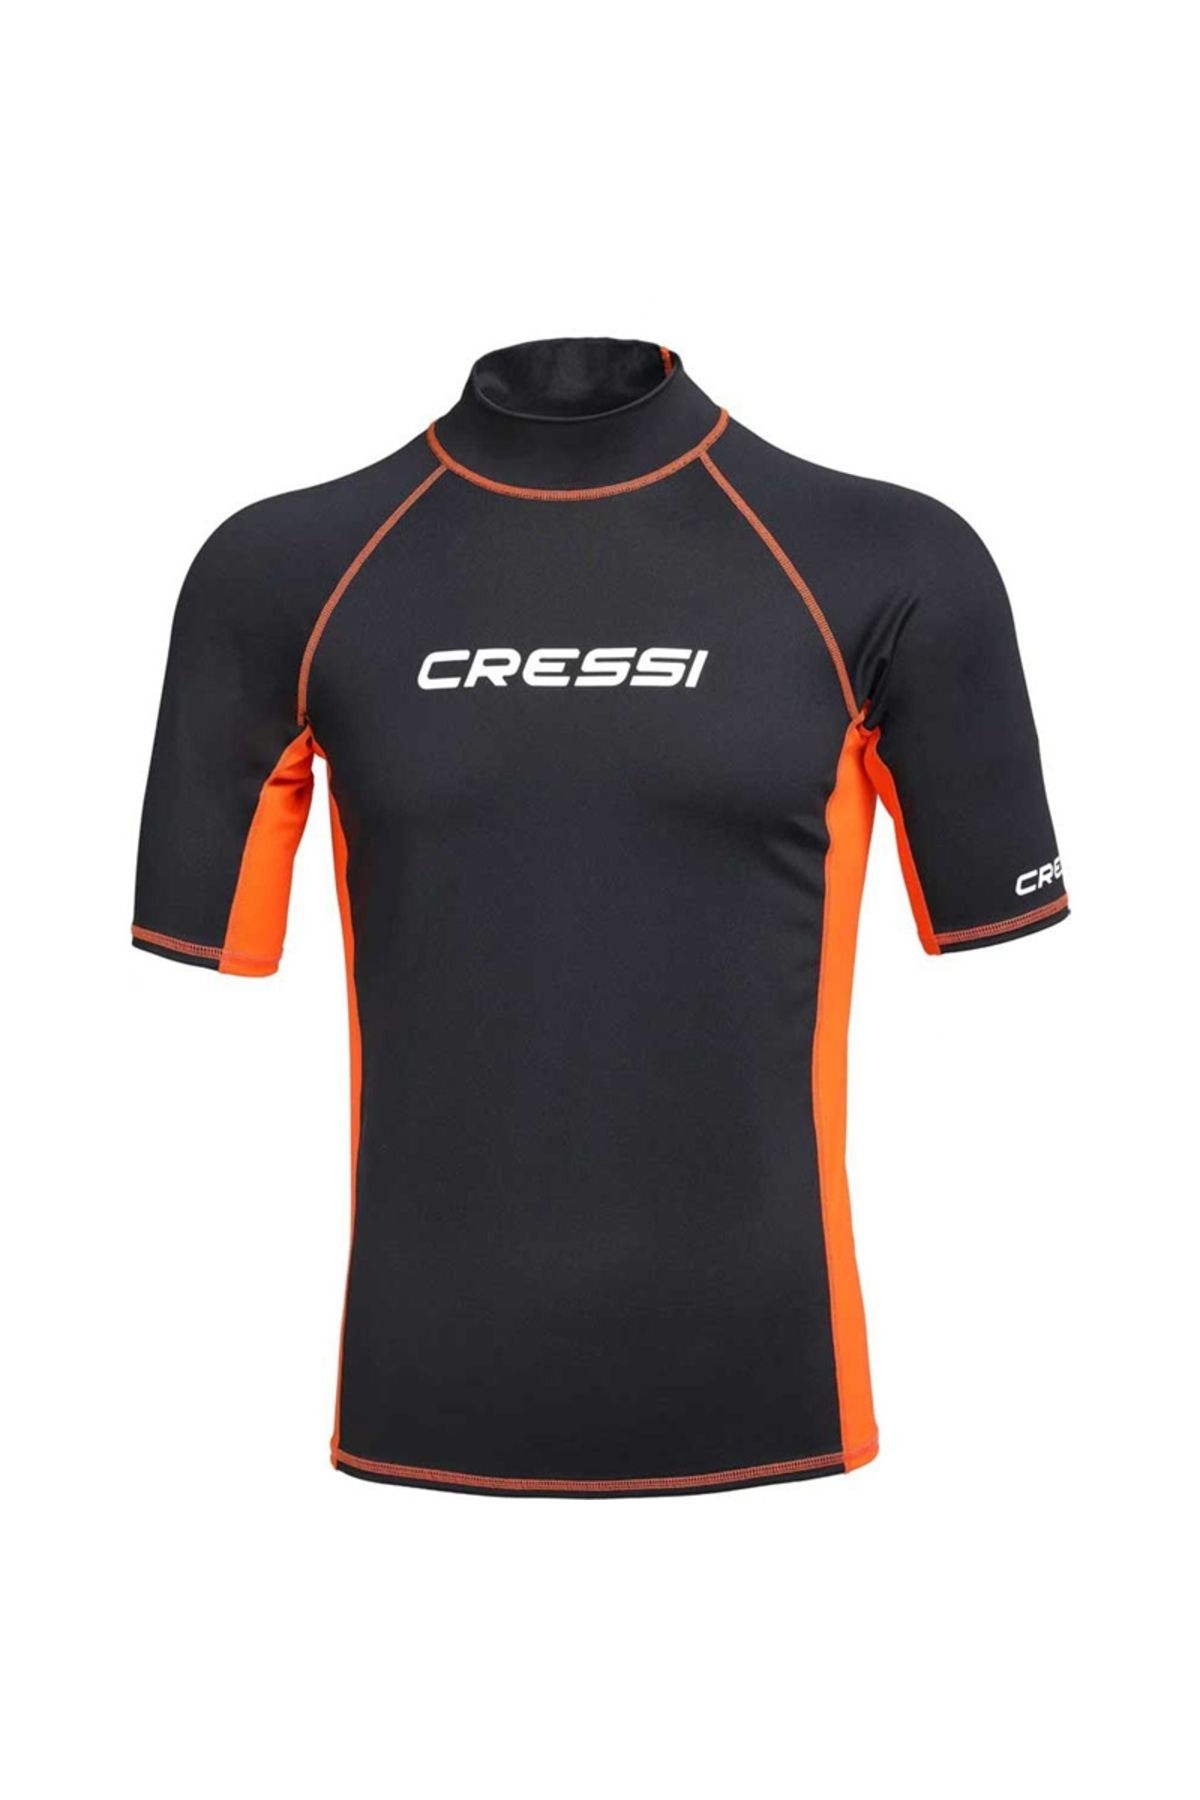 cressi sub Rash Guard Man T-Shirt BLACK - ORANGE-2XL - NO:6